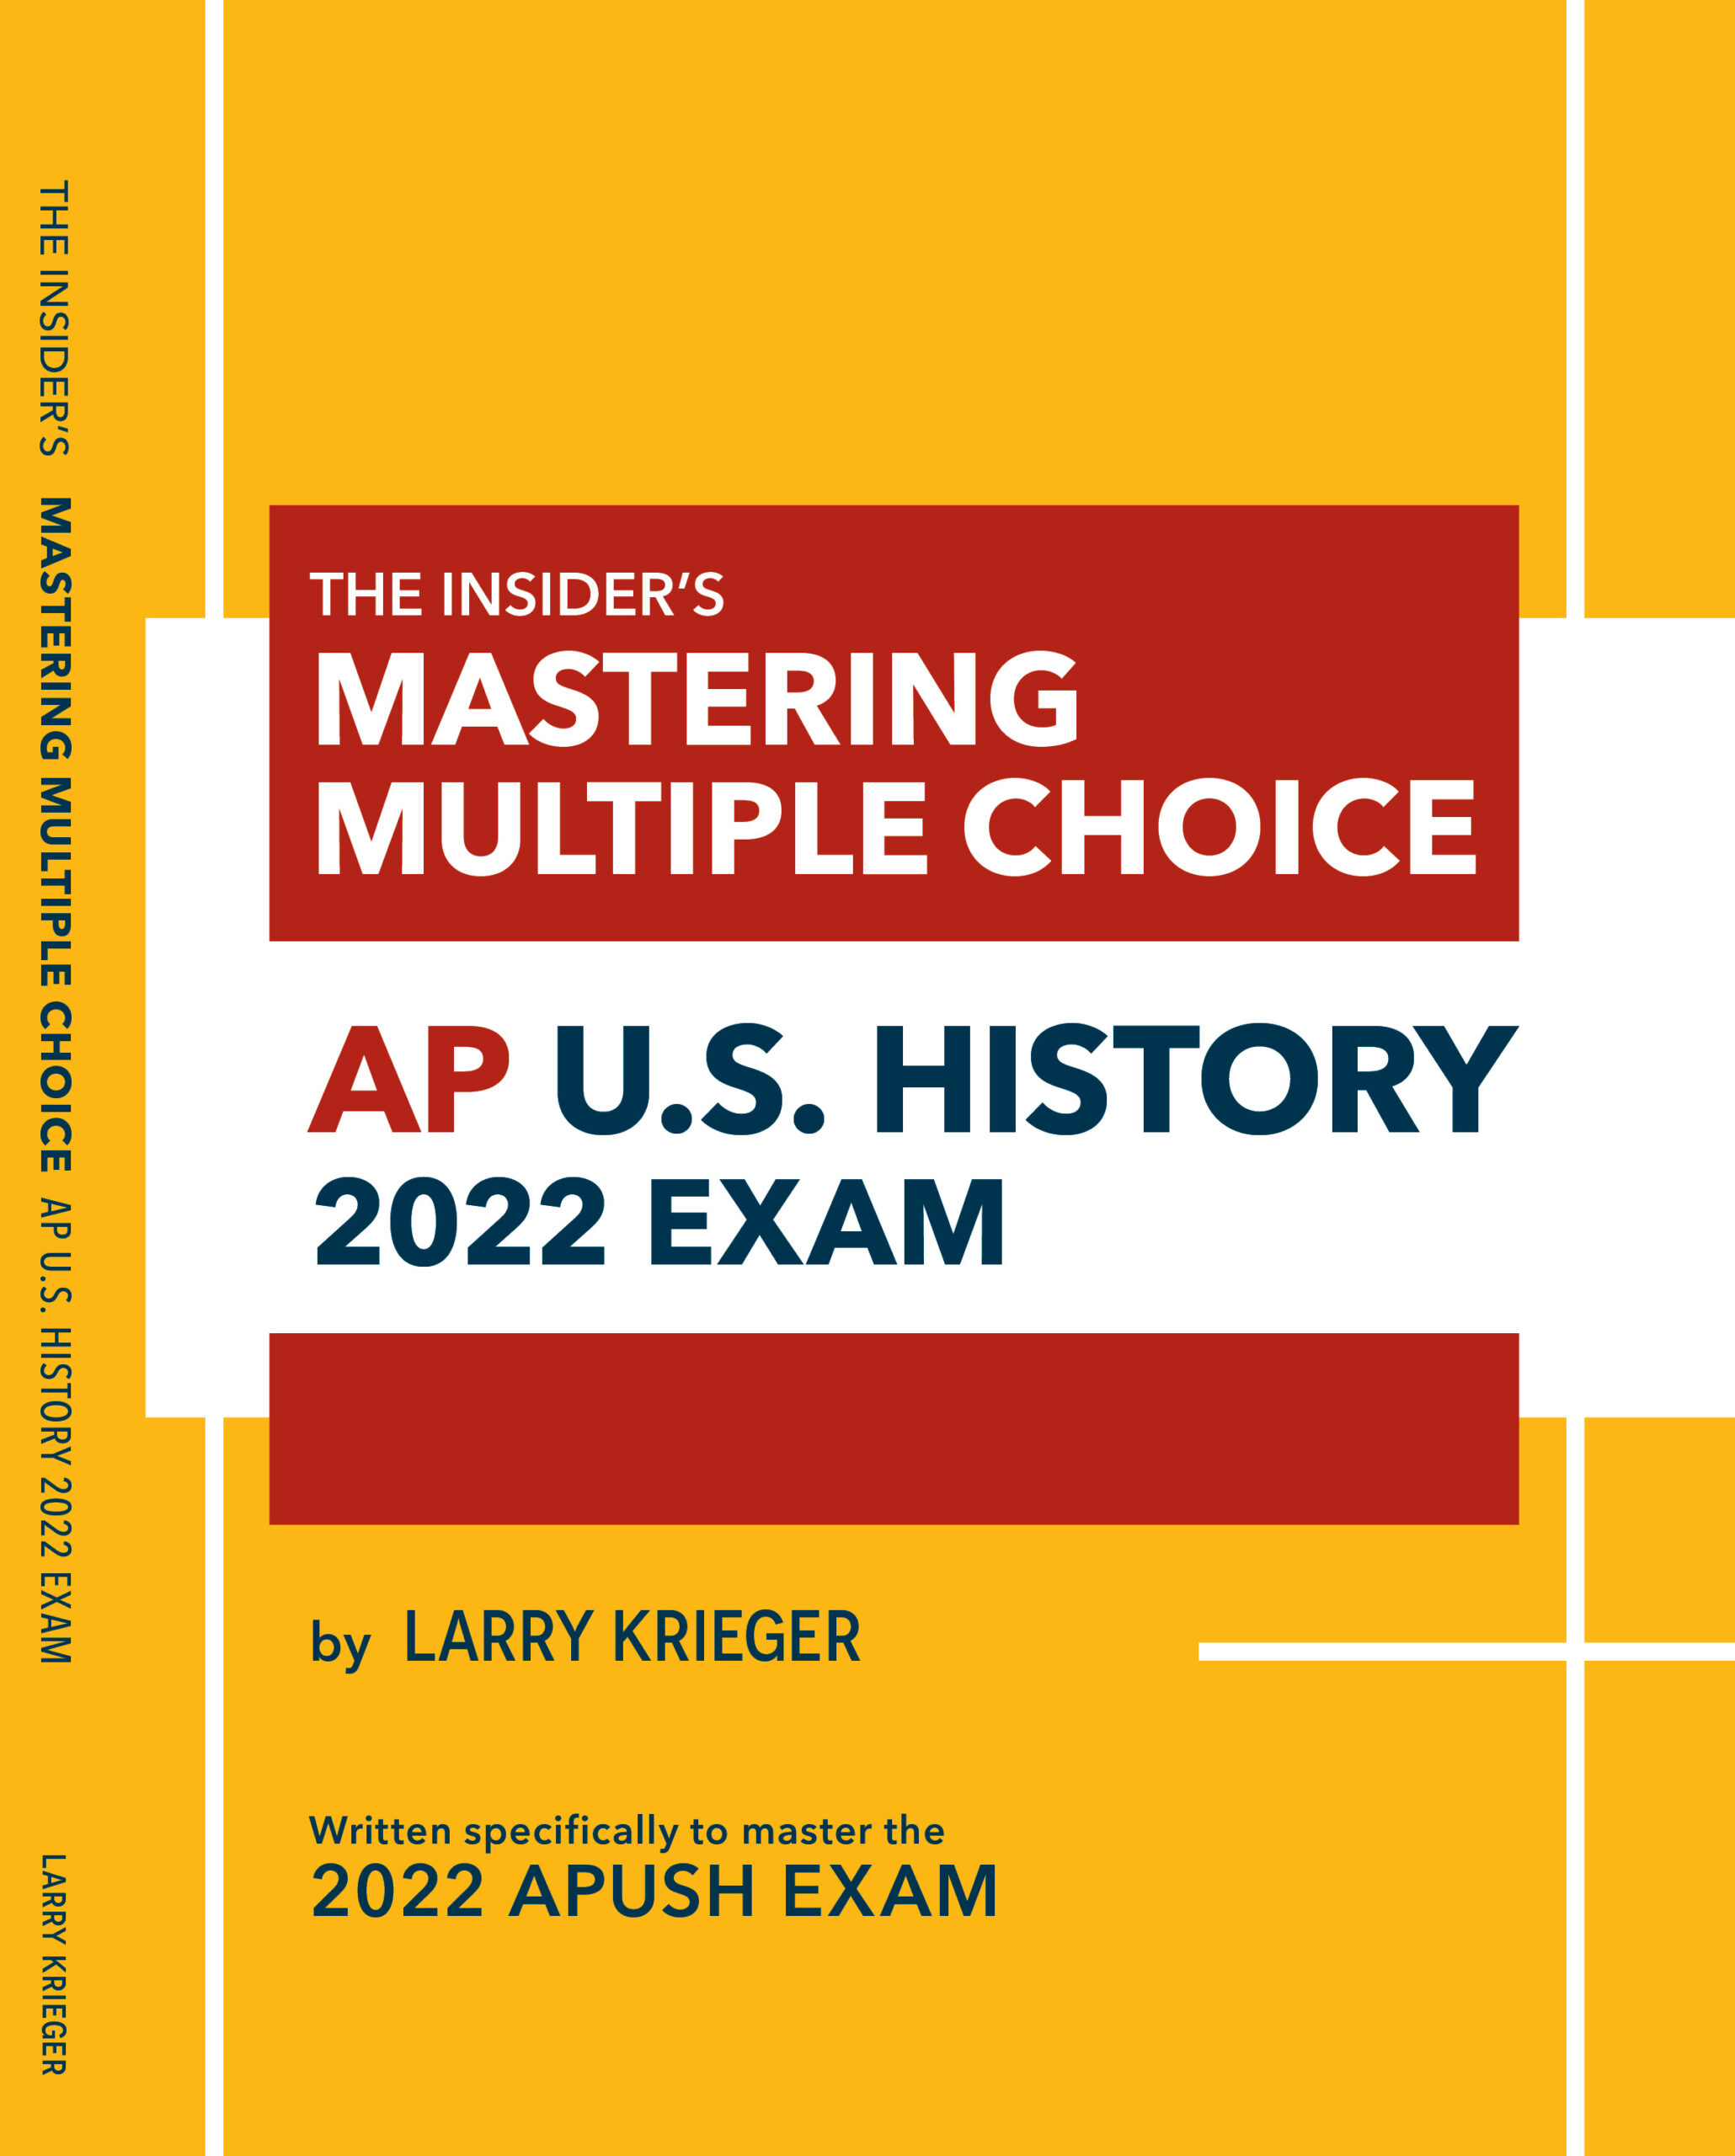 Insider's Mastering Multiple Choice AP U.S. History 2022 Exam